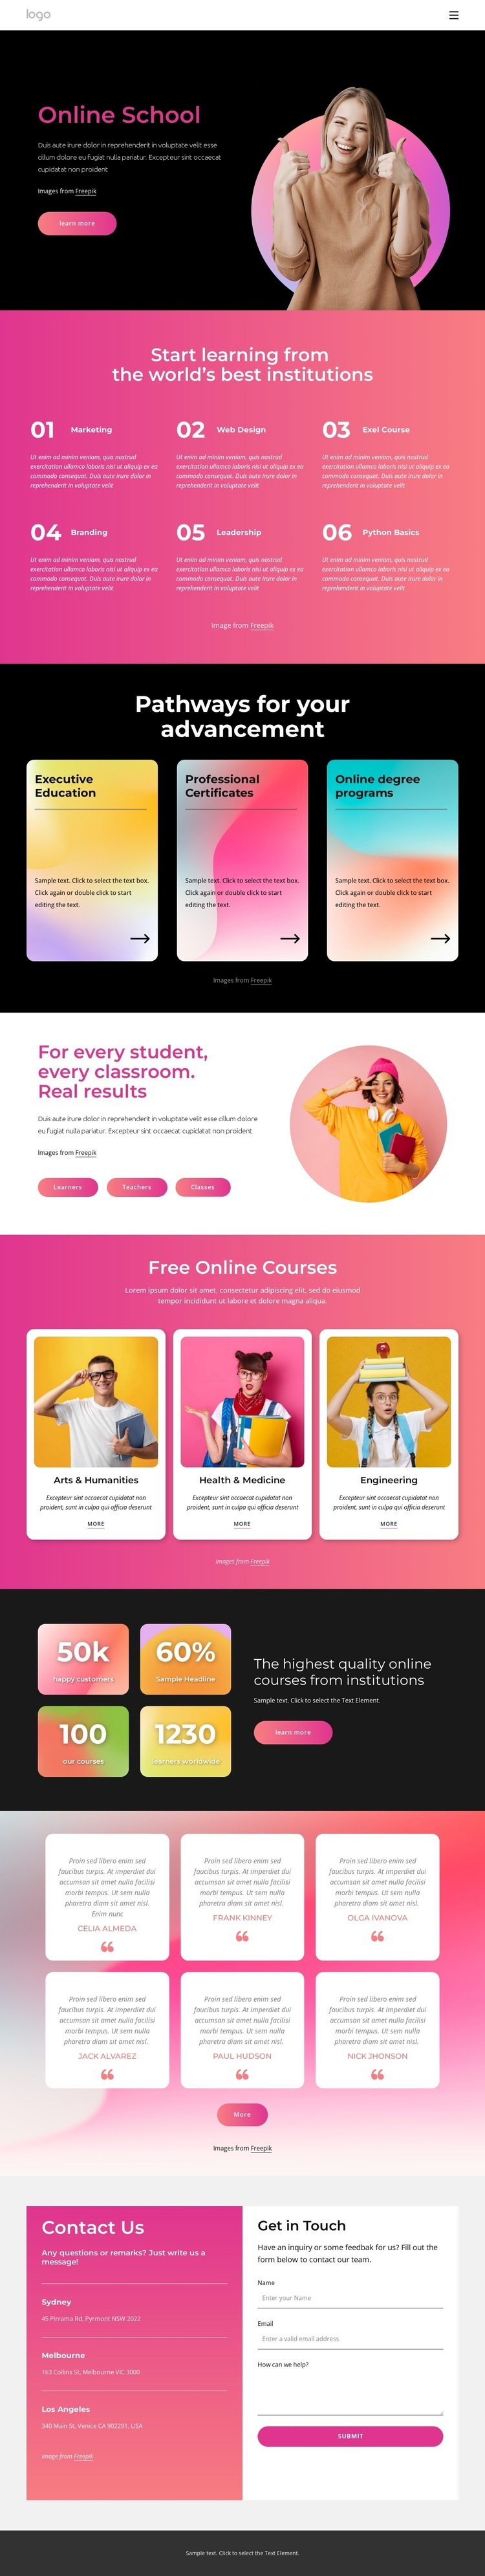 Online school Web Page Design